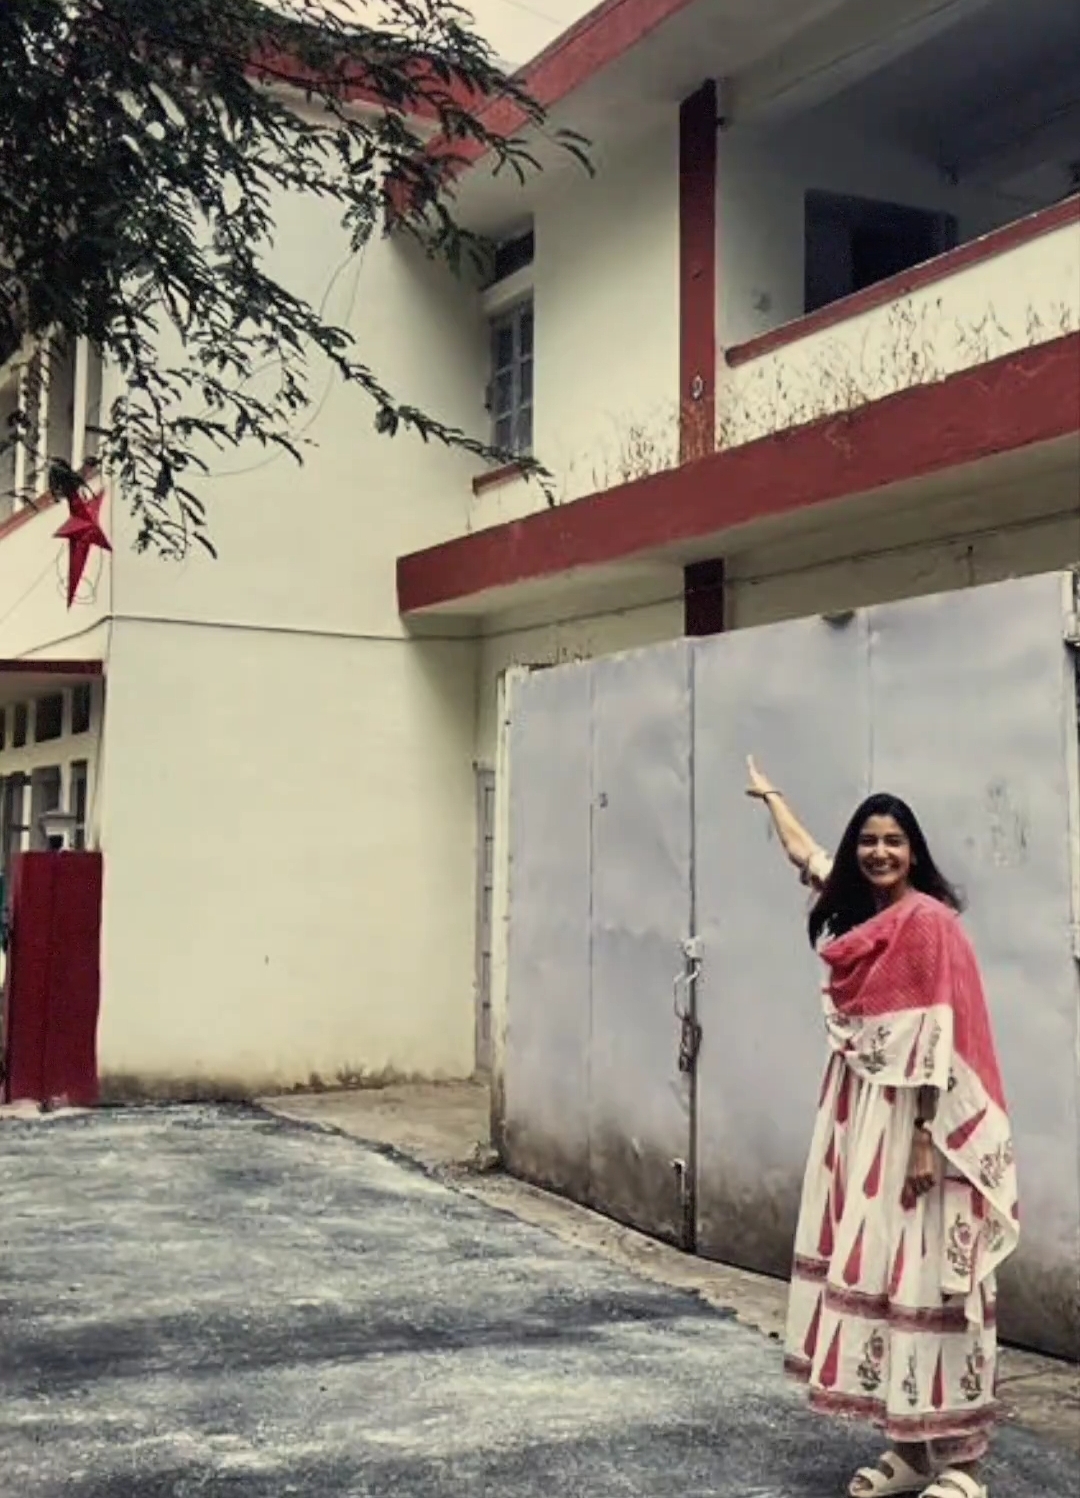 Anushka Sharma Home Video: અનુષ્કા શર્માએ જુની યાદો કરી તાજી, બાળપણના મકાનનો વીડિયો કર્યો શેર